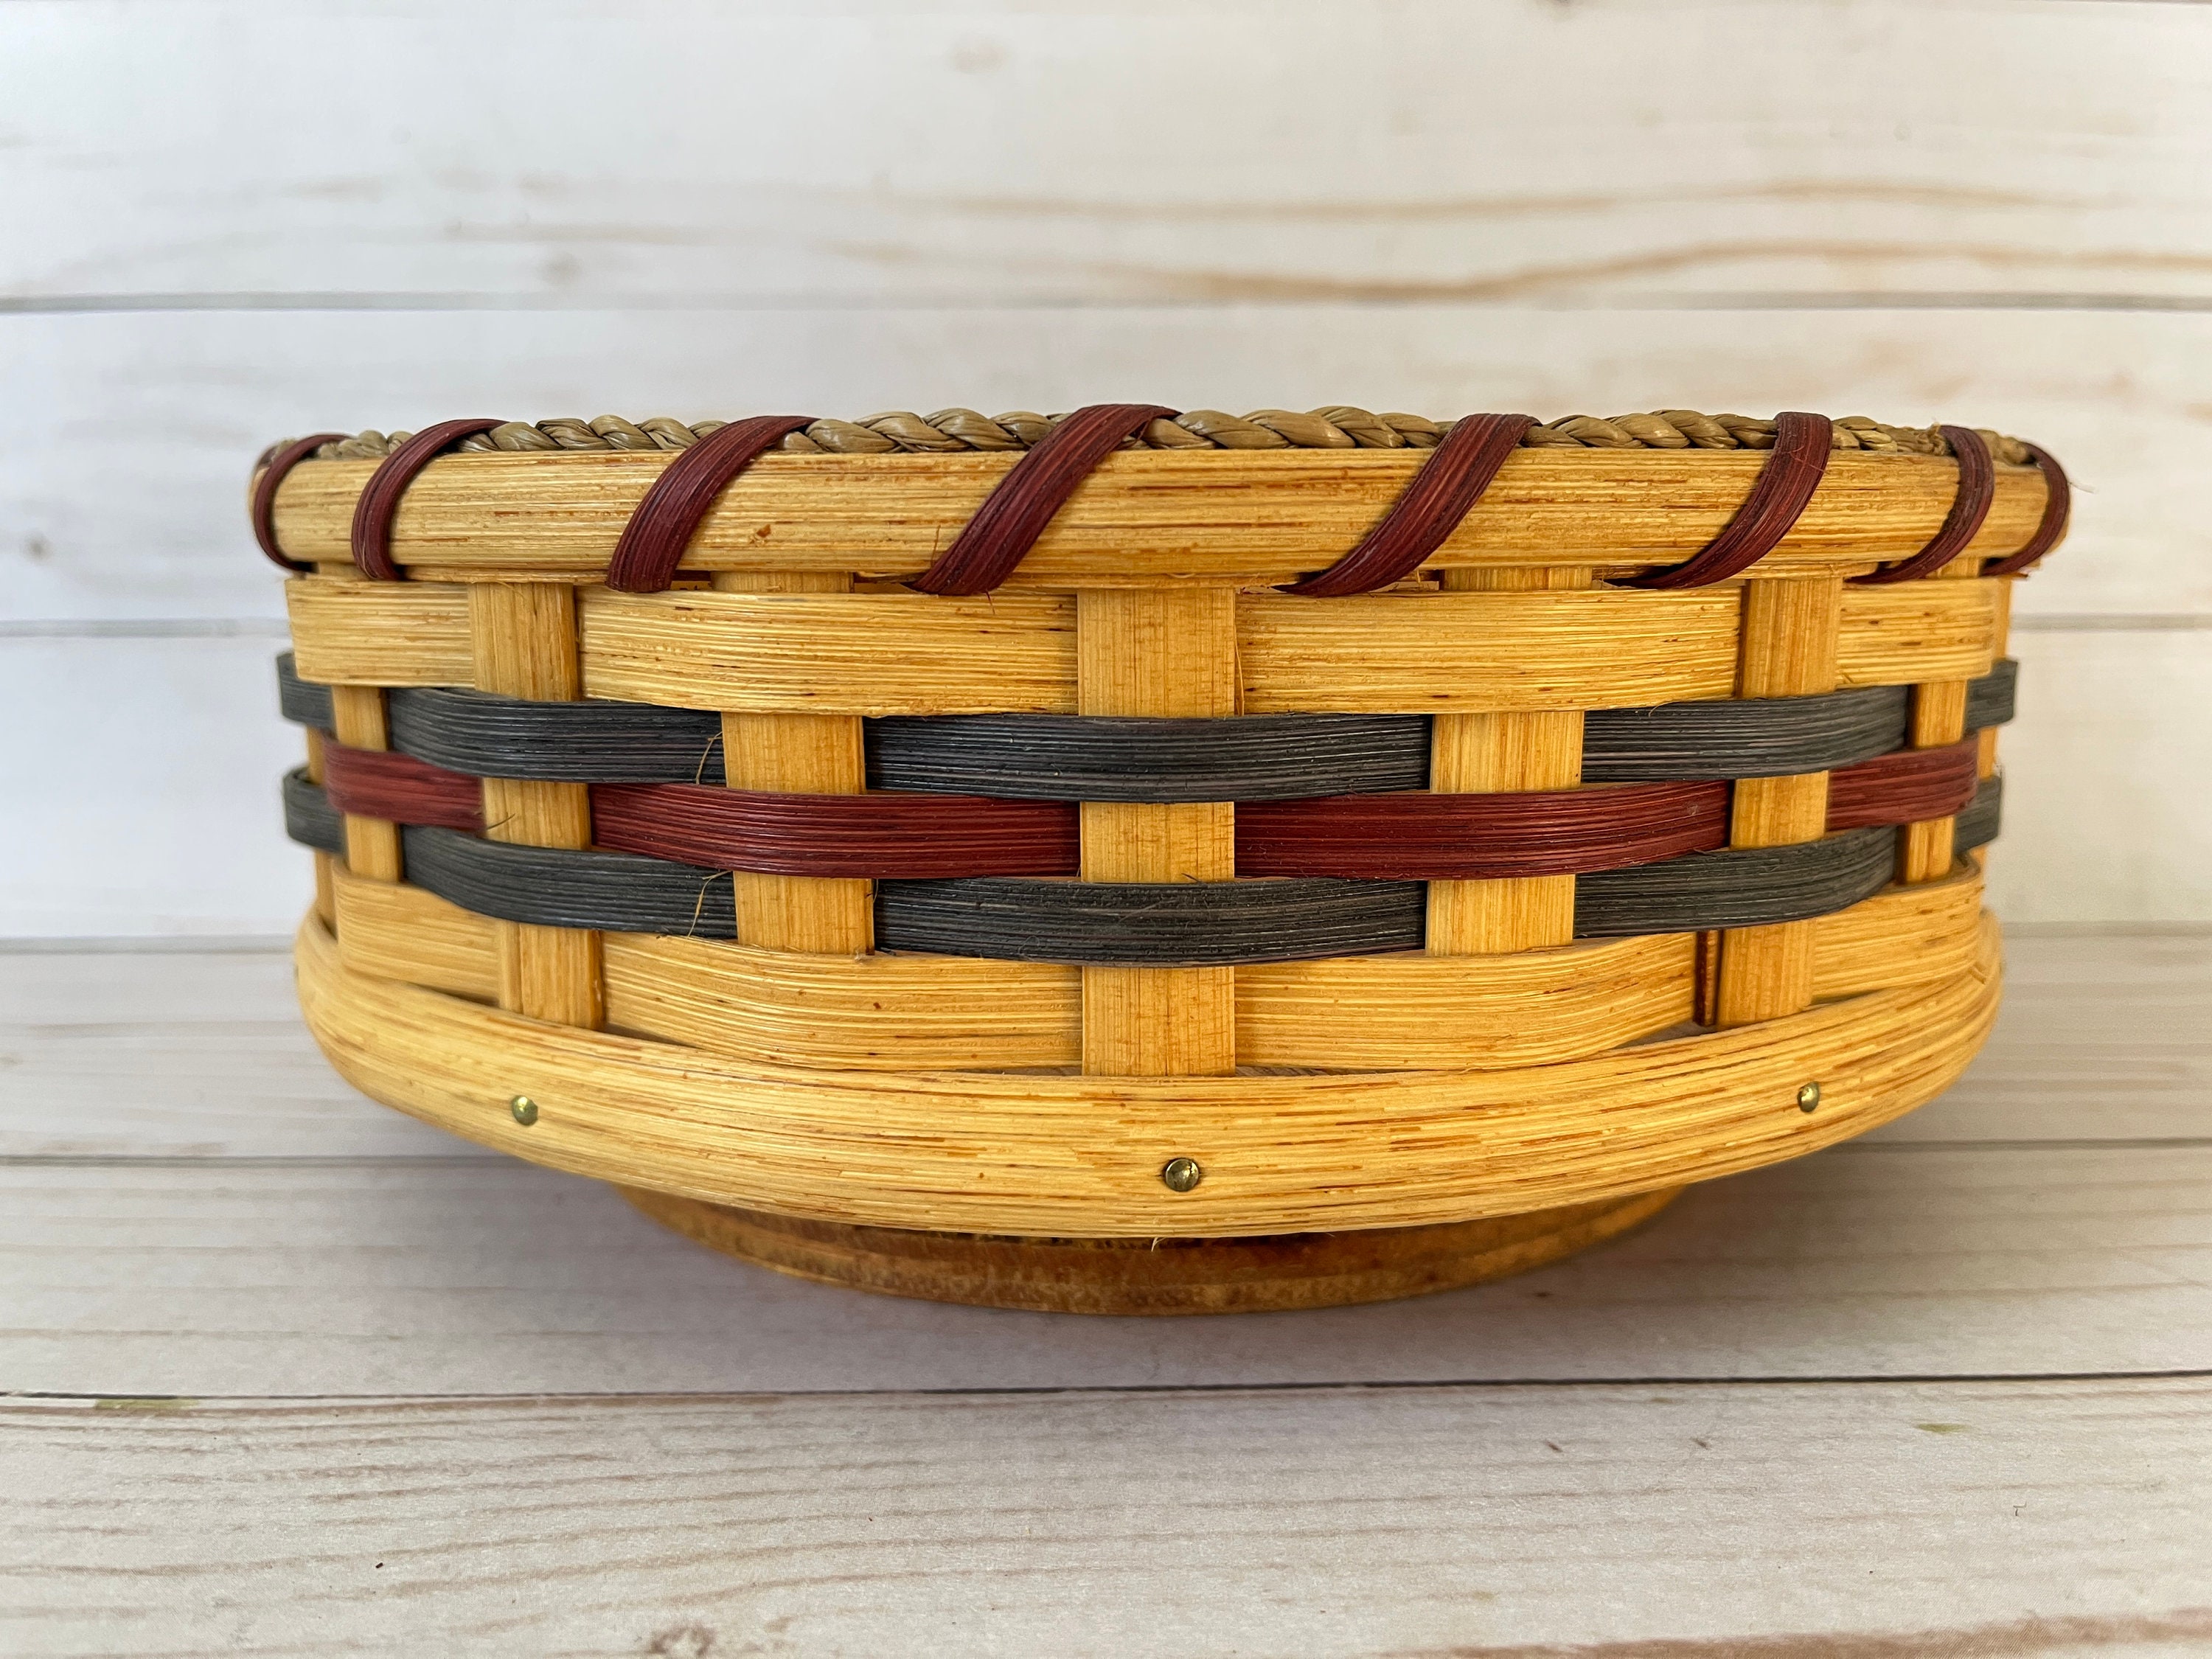 Woven Tote Basket  Amish Flexible Wicker Market & Shopping Bag — Amish  Baskets